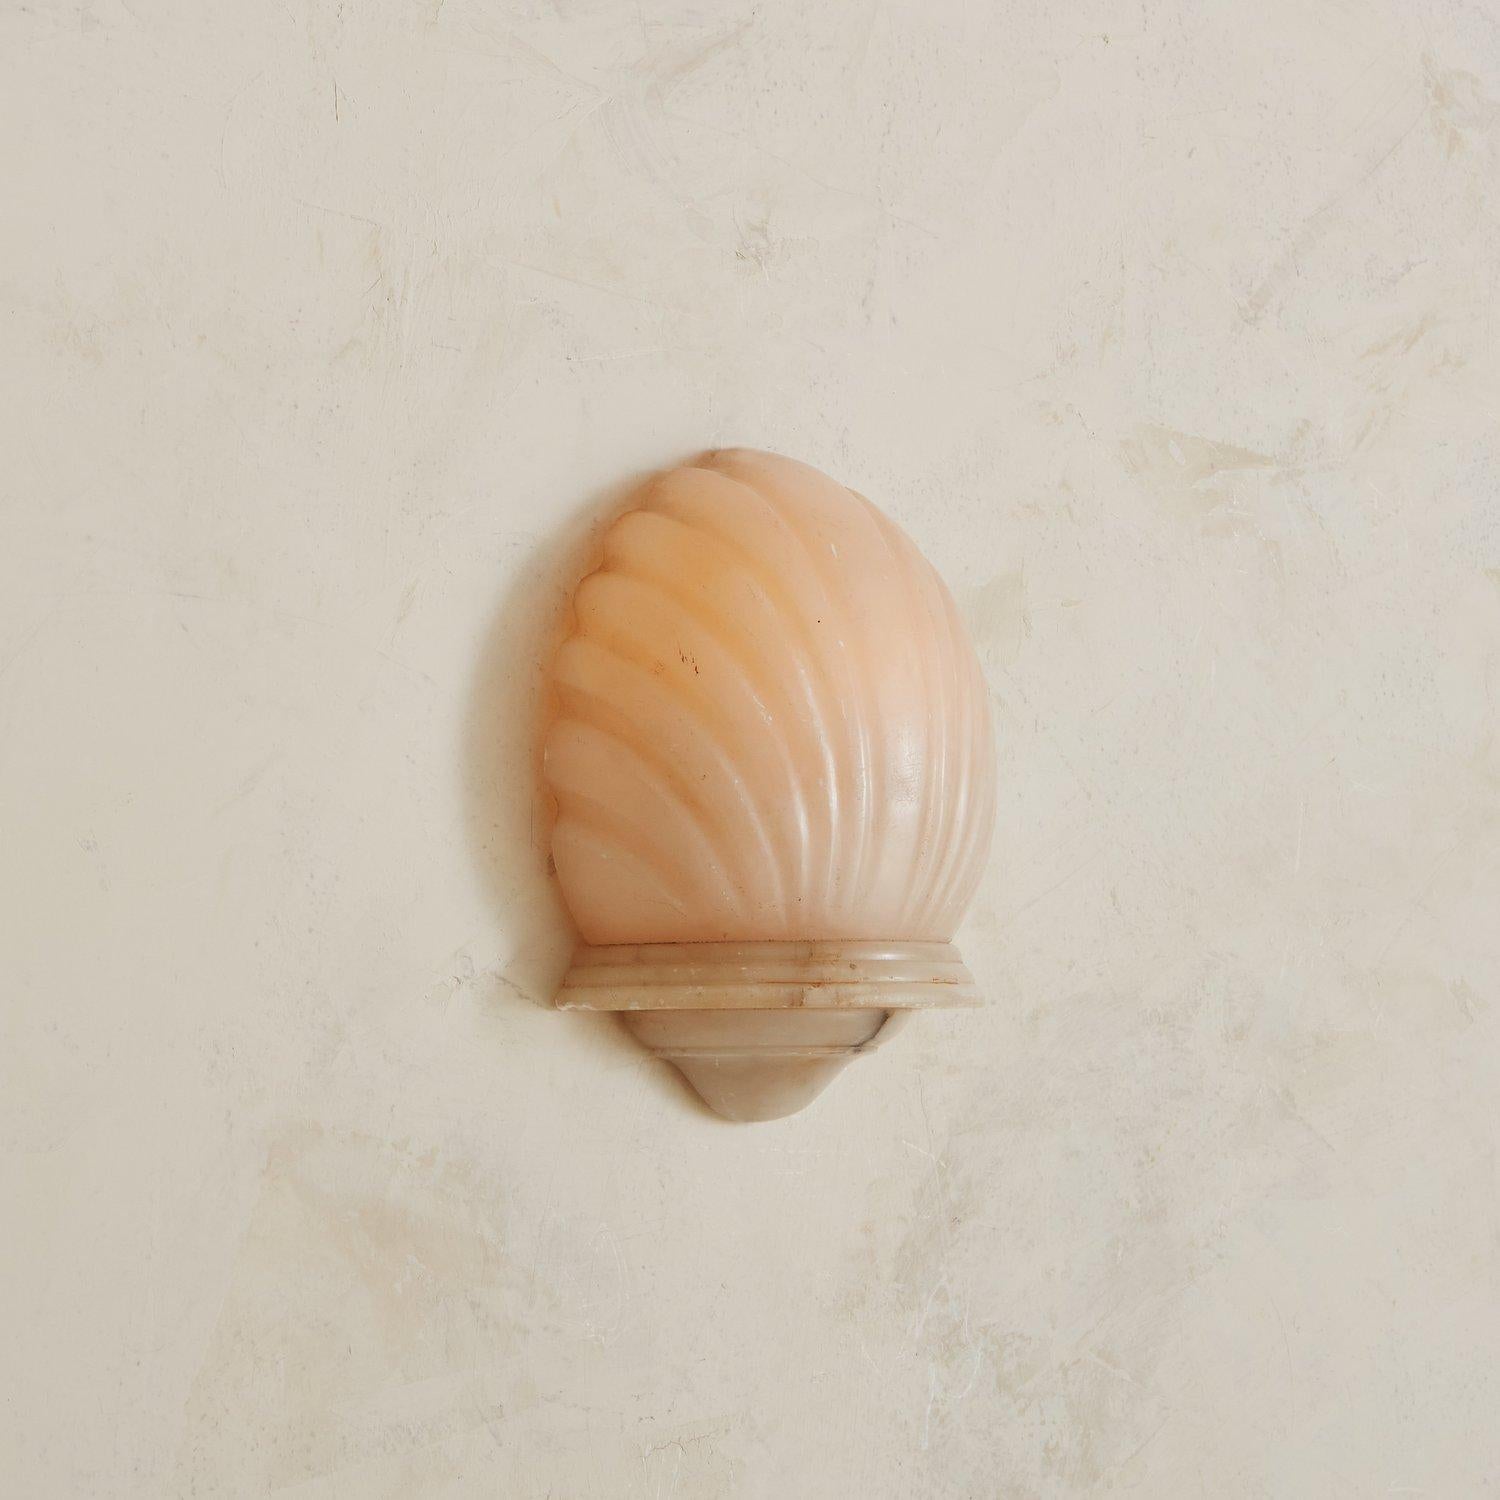 Organic Modern Shell Shaped Alabaster Sconce, France, 1920s